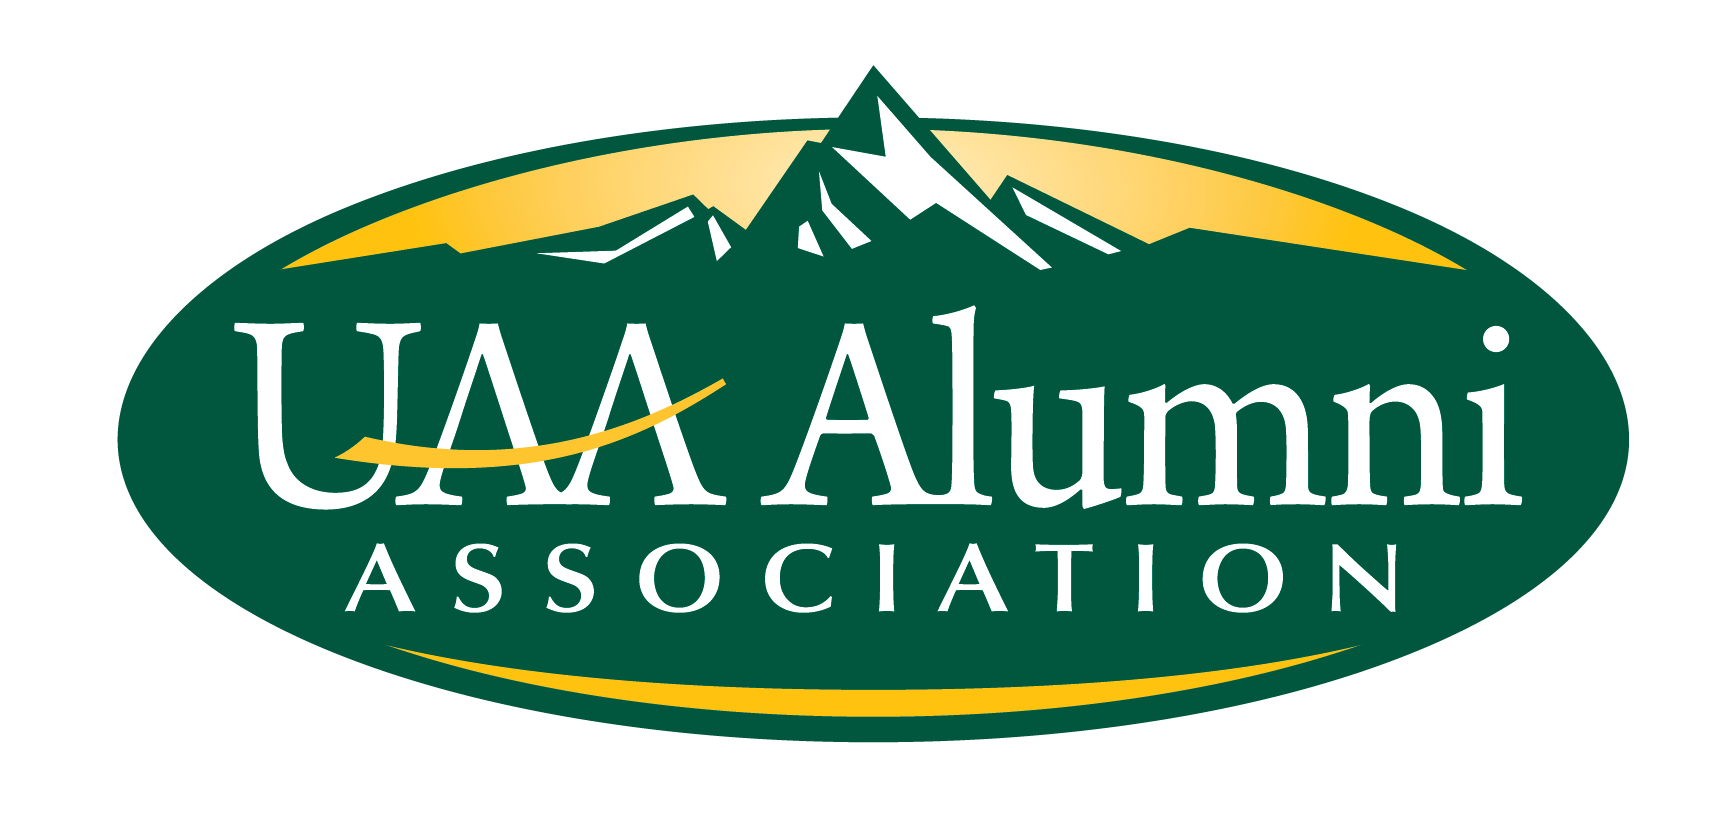 UAA Alumni Association